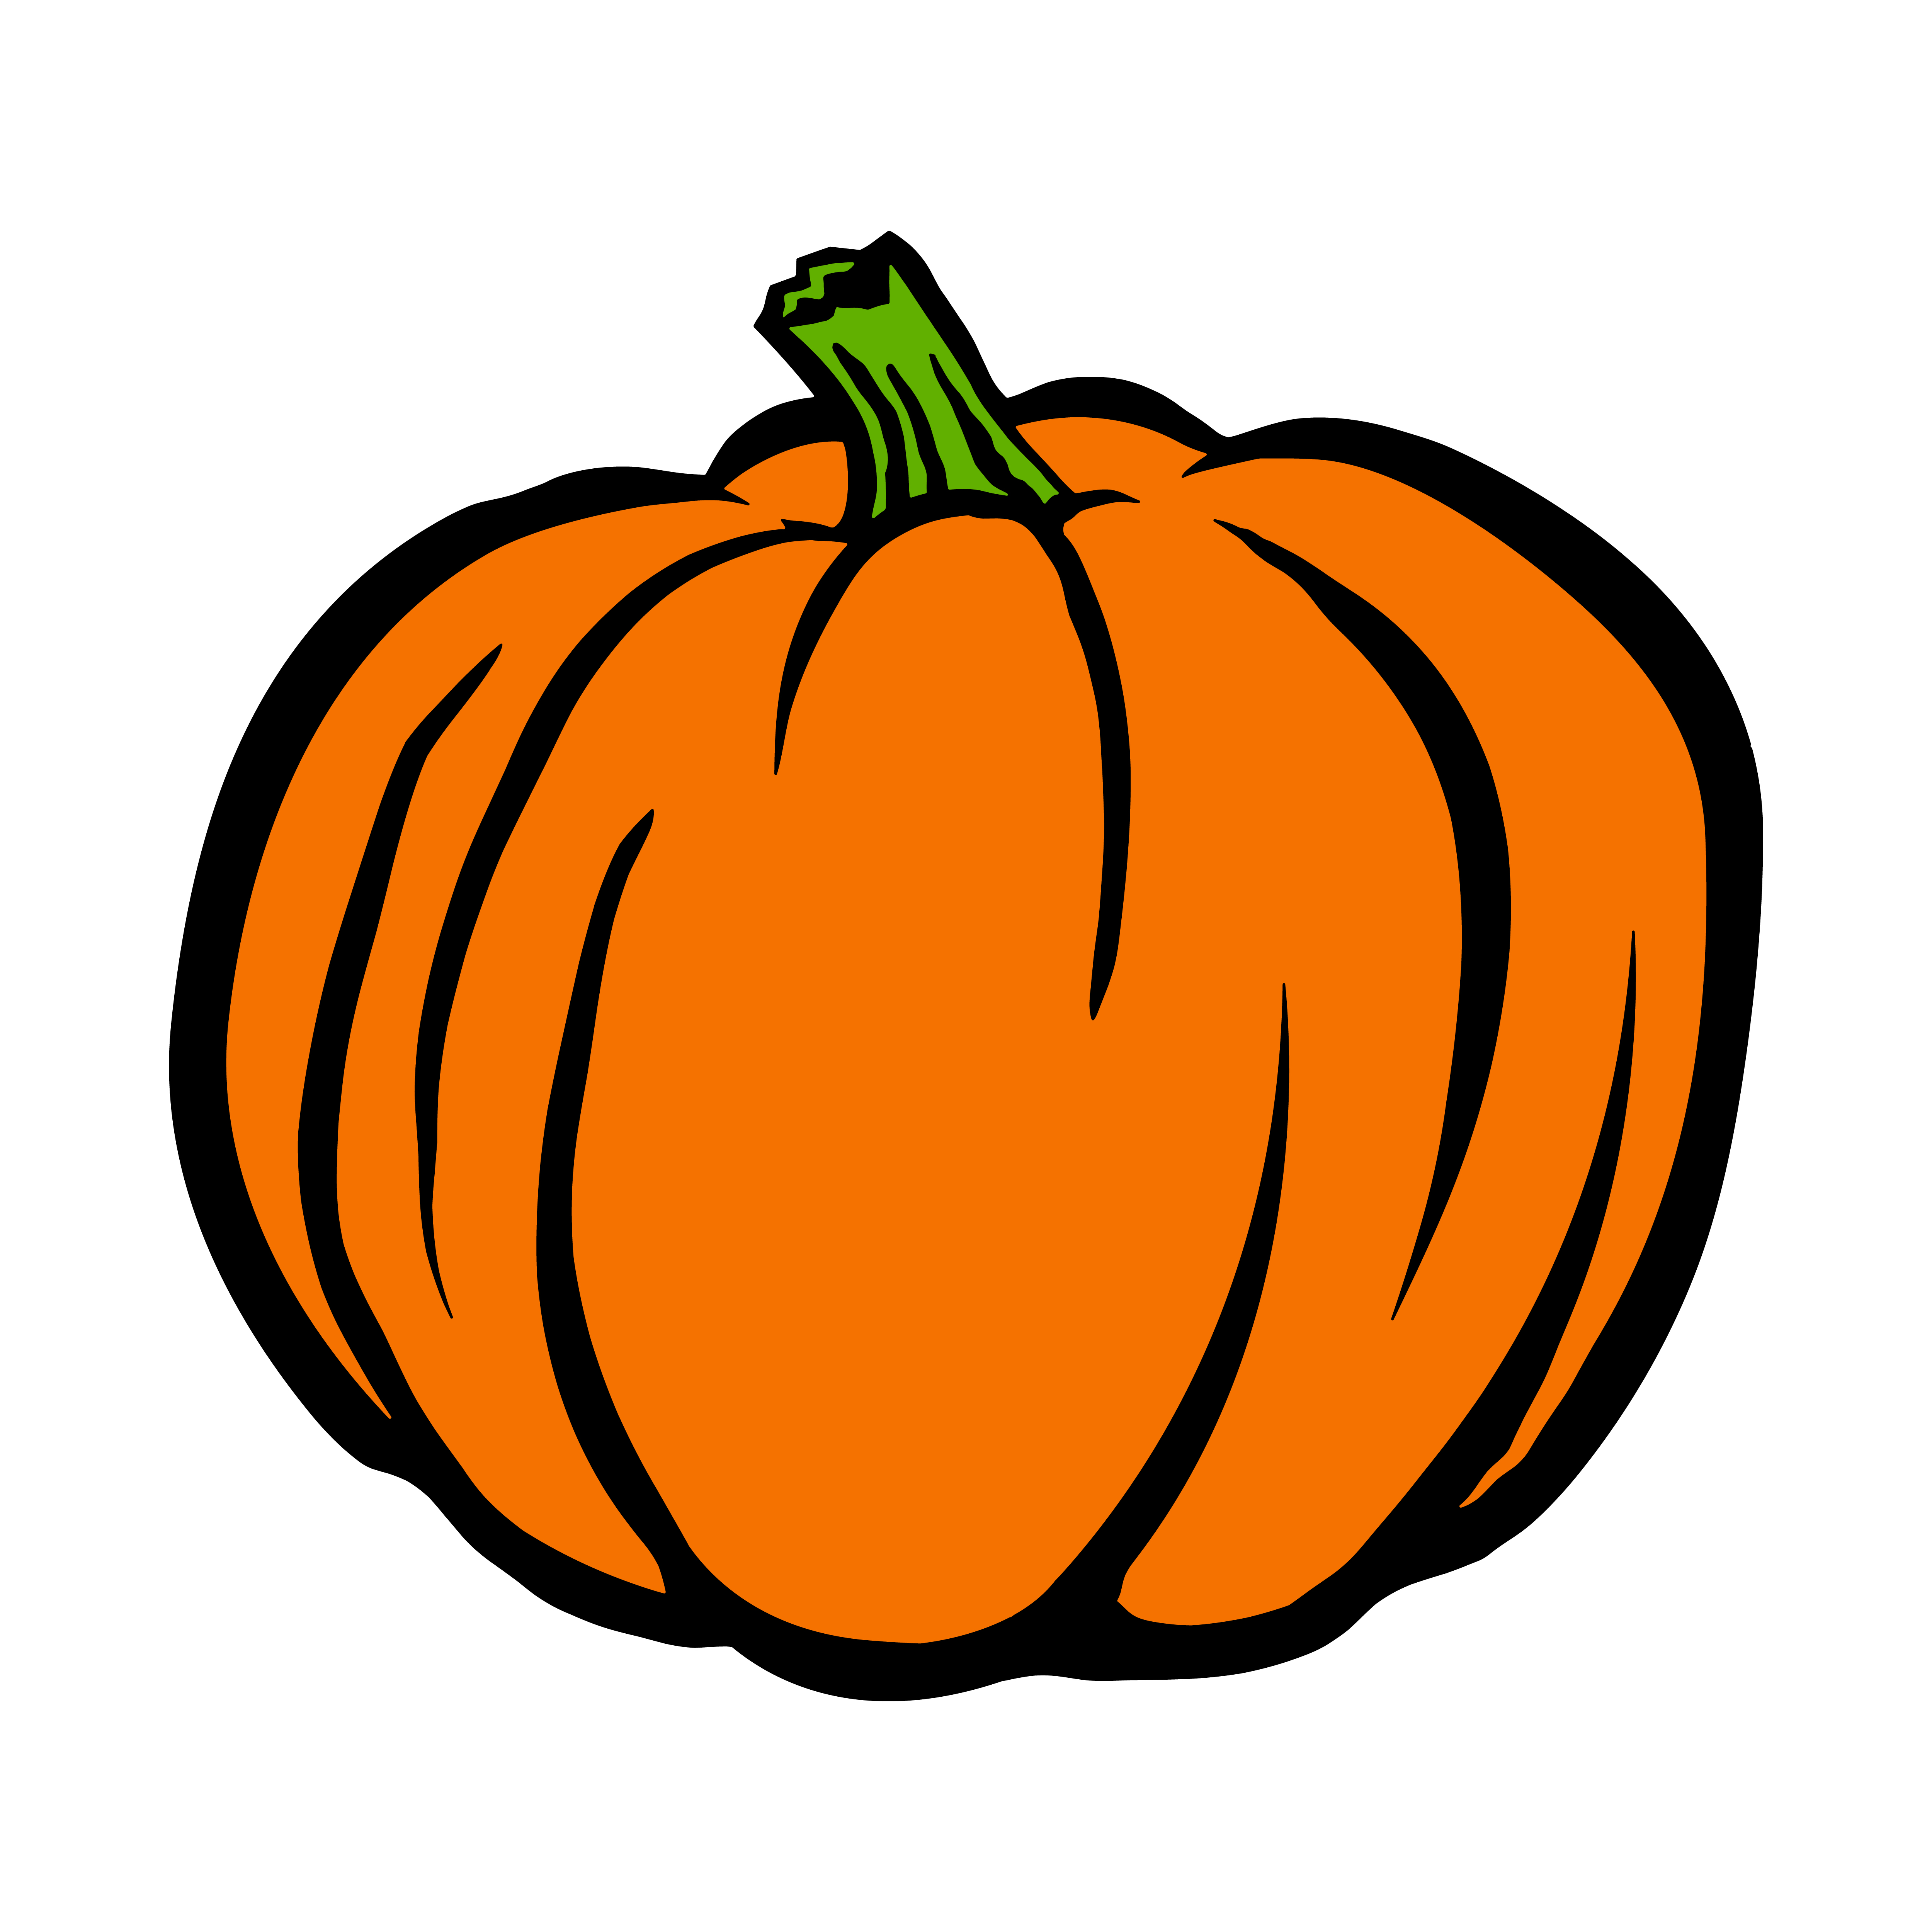 Download Pumpkin Vector Icon - Download Free Vectors, Clipart ...